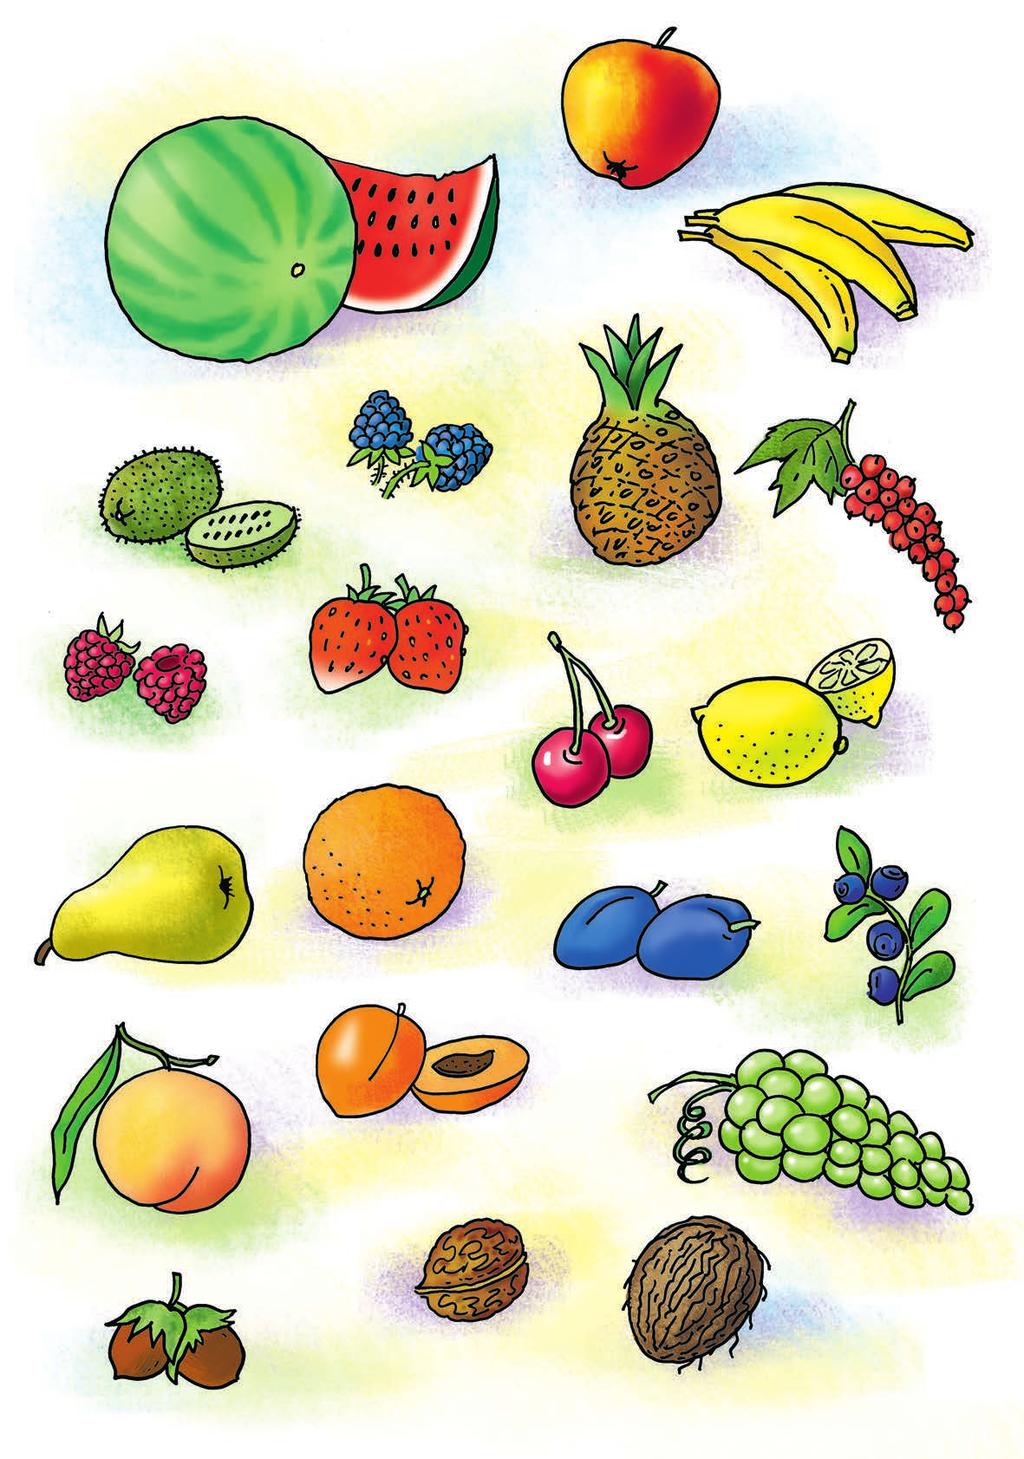 Ovoce - Fruits [fru:ts] jablko an apple [ pl] banán a banana [bə'na:nə] meloun a water melon [wo:tə melən] ananas a pine-apple [pain pl] rybíz červený a red currant [red karənt] kiwi a kiwi fruit